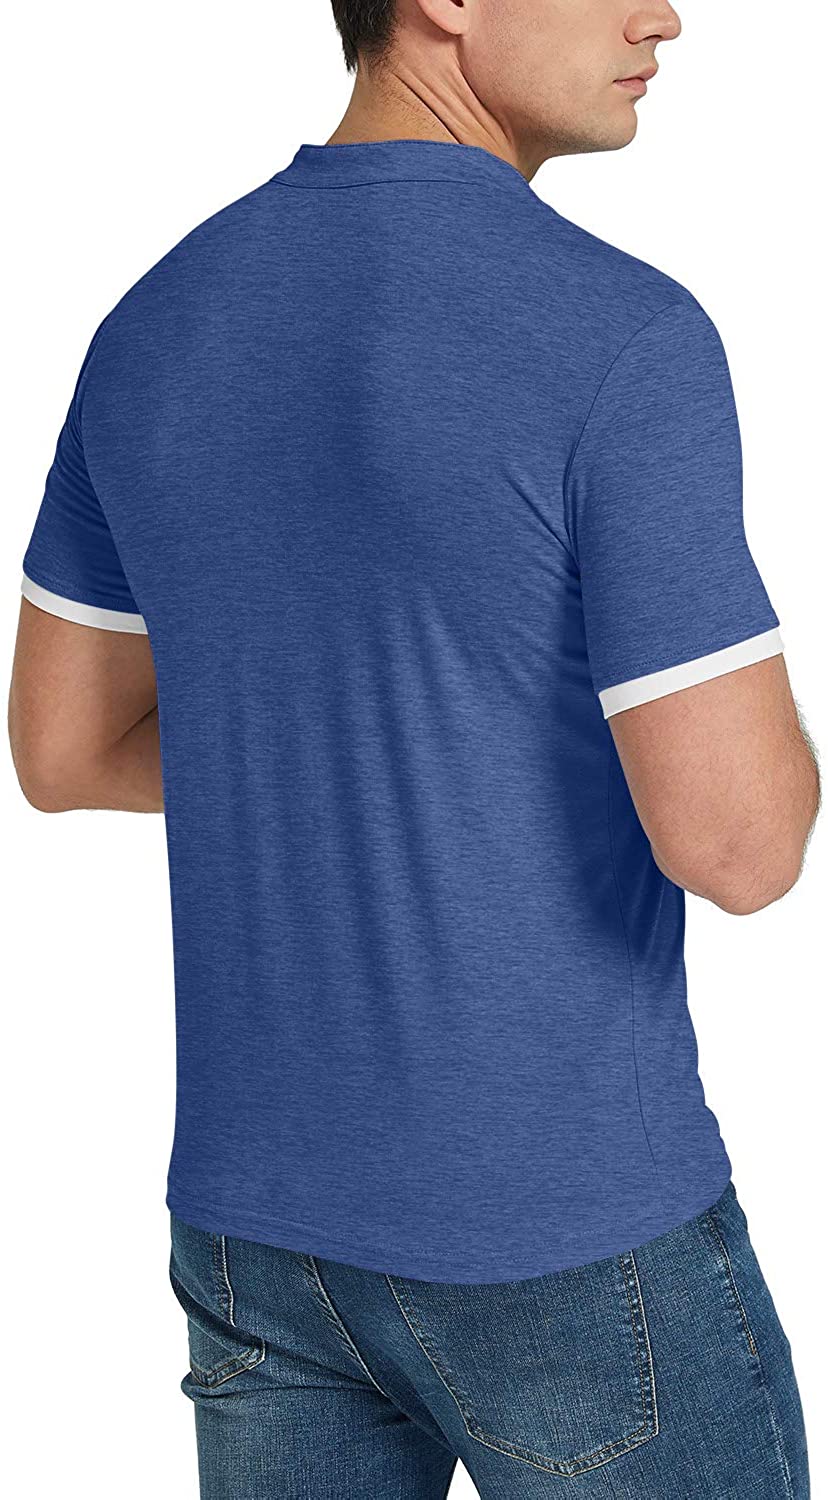 KUYIGO Mens Polo Shirt Short Sleeve Classic Sports Top Casual Workout Sports Shirts